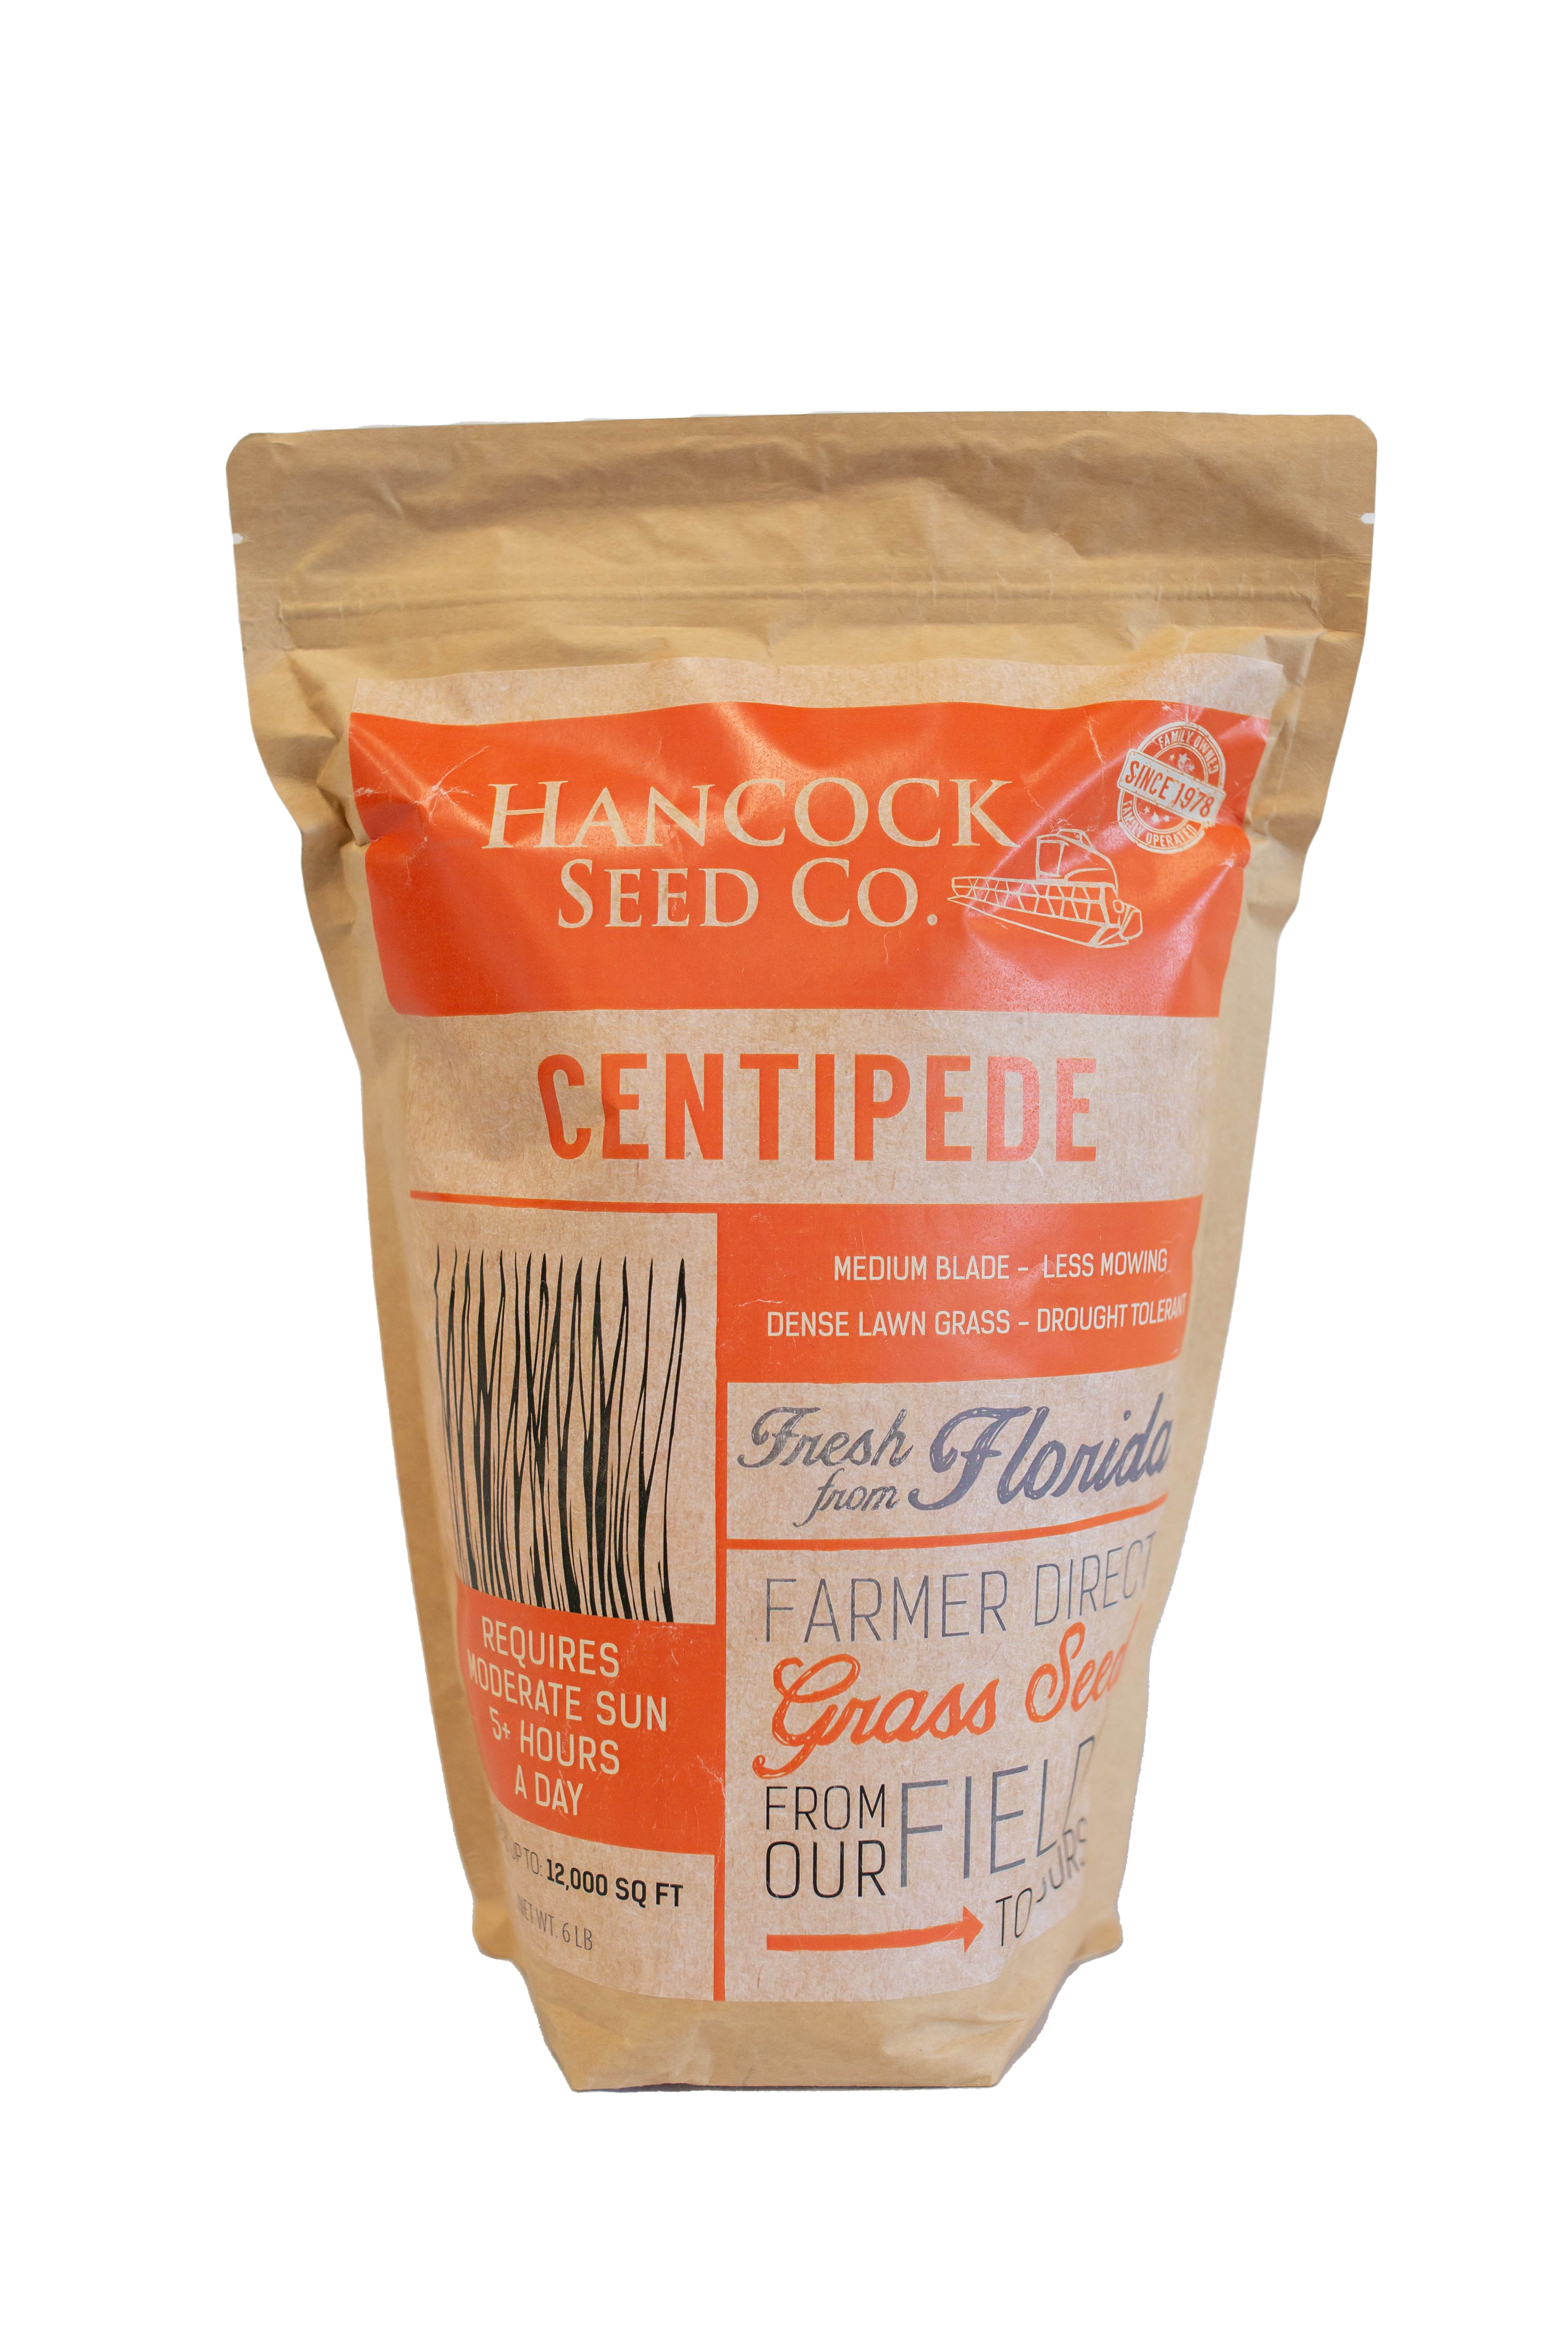 Hancock's Centipede, Coated, 6 lb. Bag